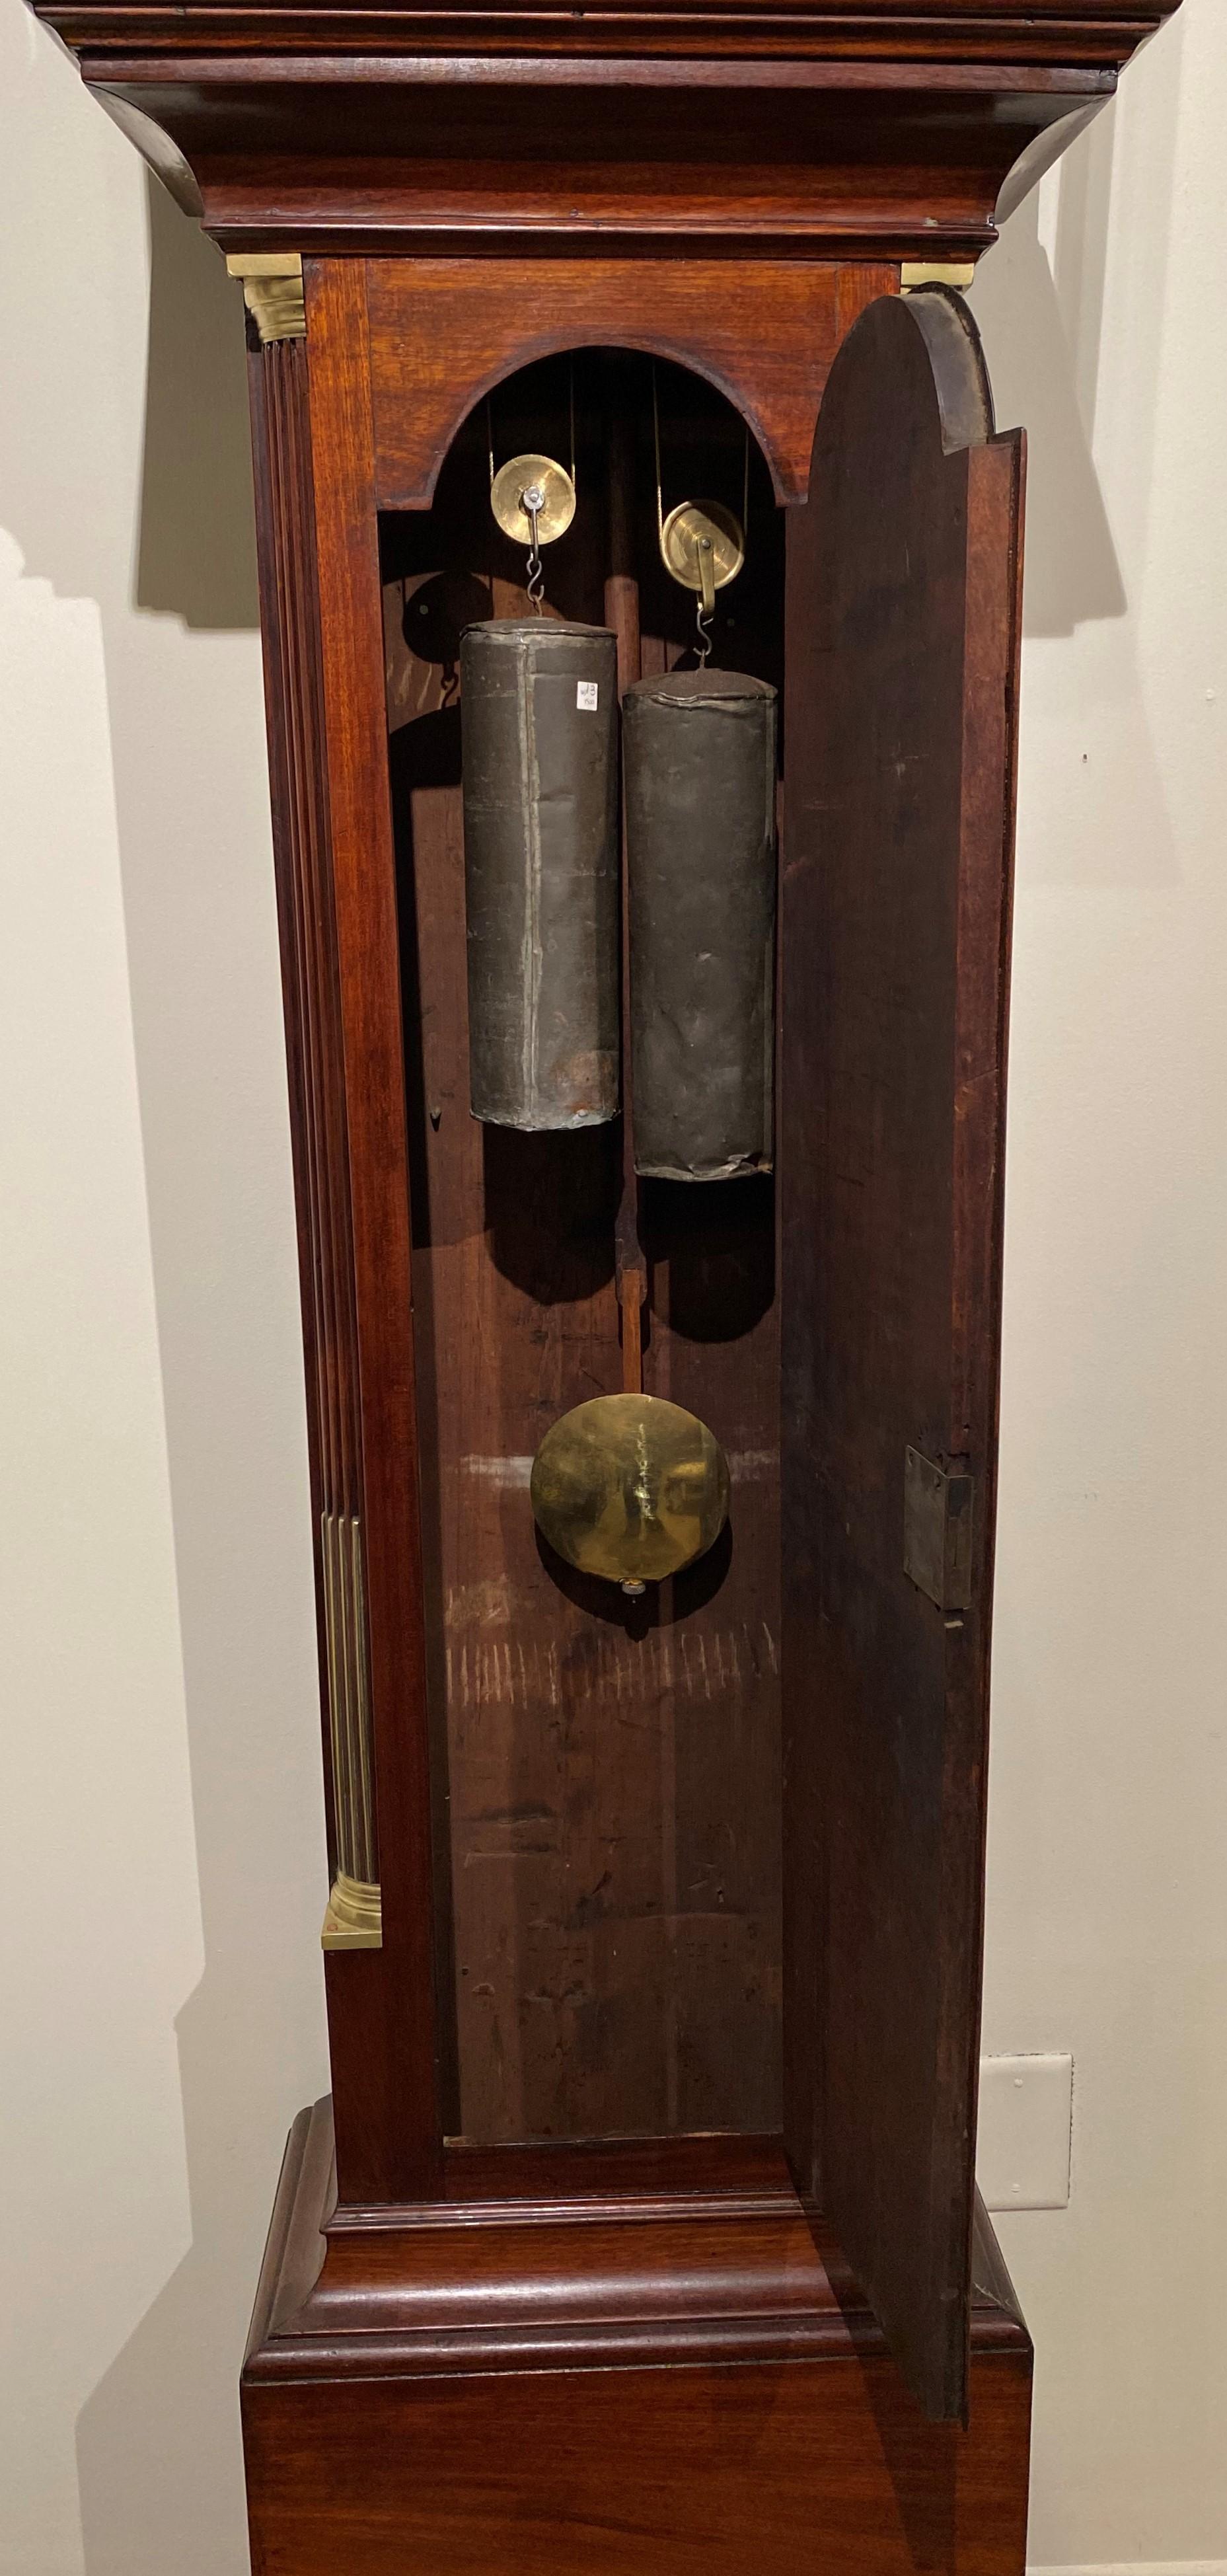 Aaron Willard Mahogany Tall Case Clock with Moon Phase Dial 1793 8